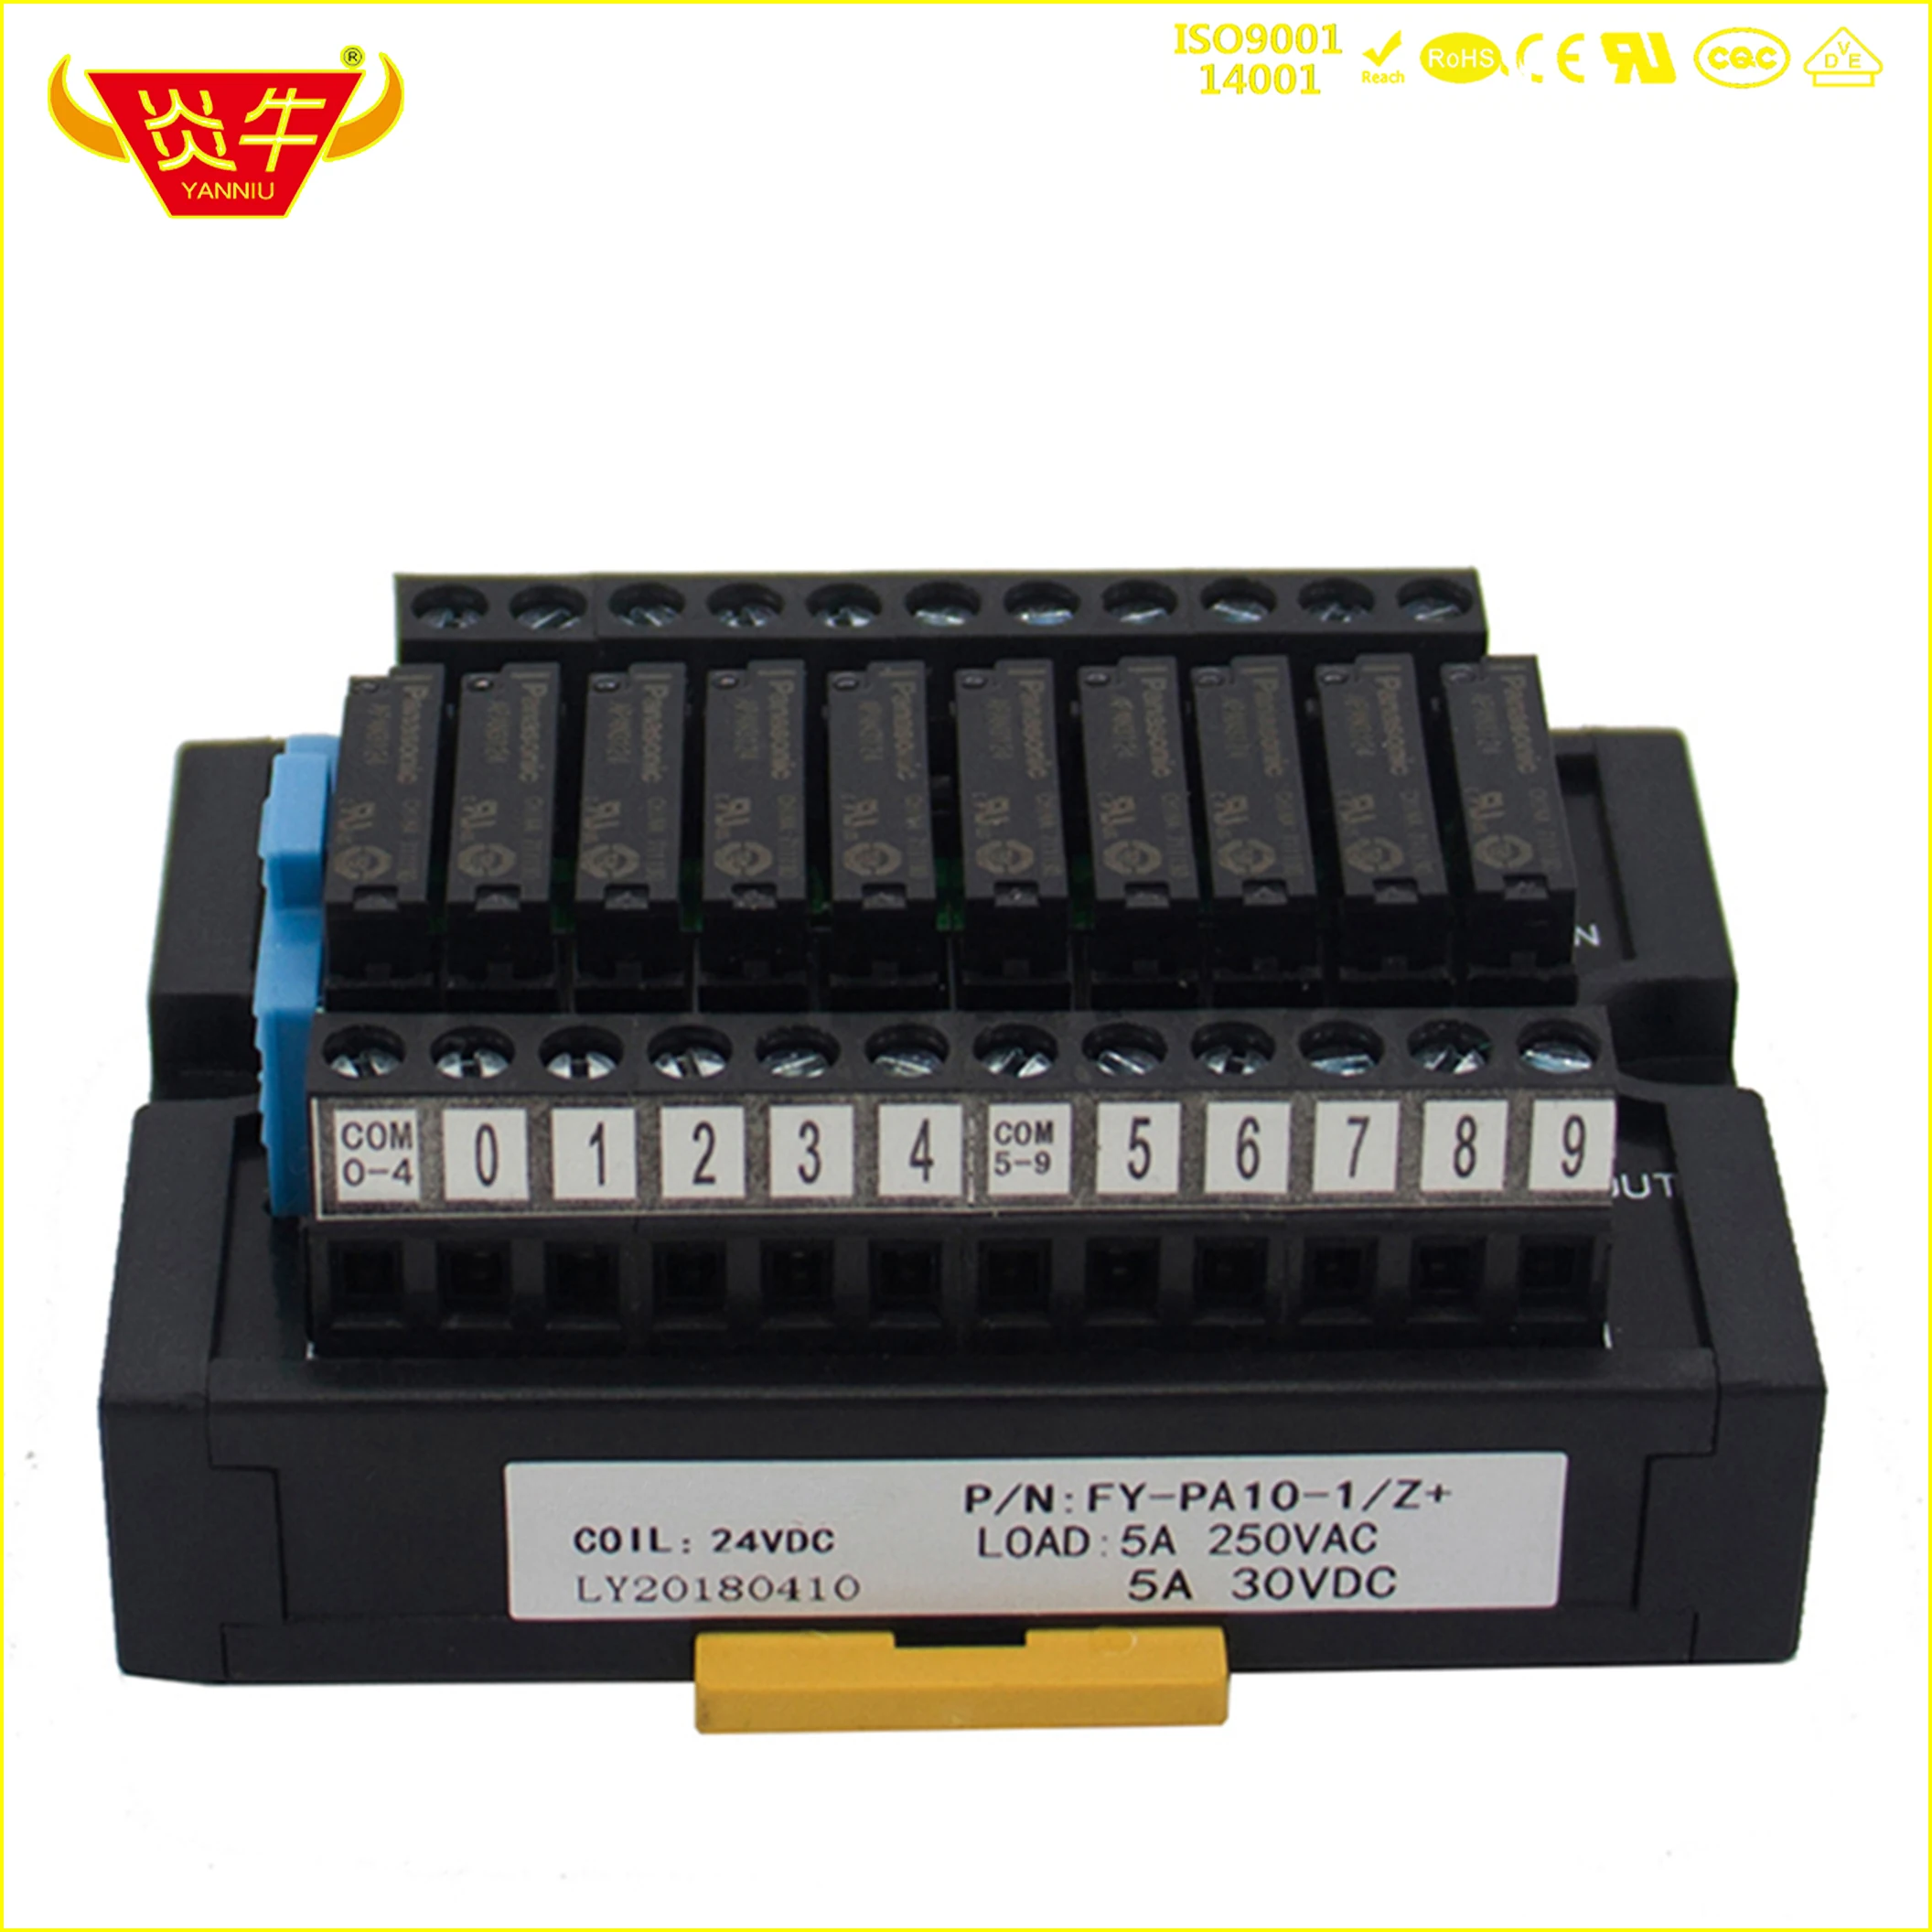 Panasonic APAN3105 APAN3112 APAN3124  Slim relay  10 channel DIN Mounted relay module  Industrial control  for PLC  YANNIU